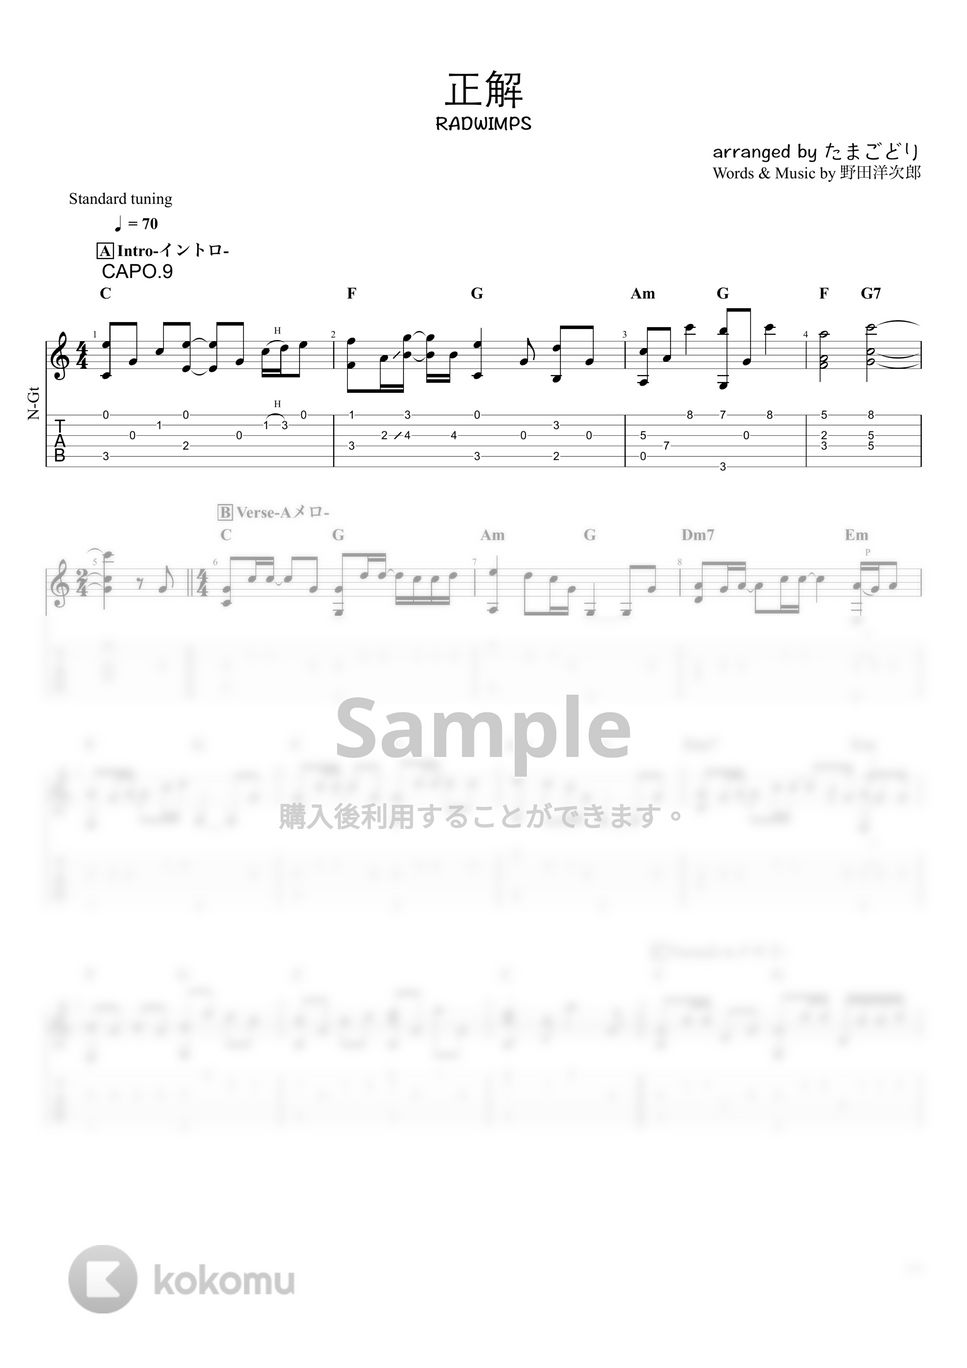 RADWIMPS - 正解 (ソロギター) by たまごどり